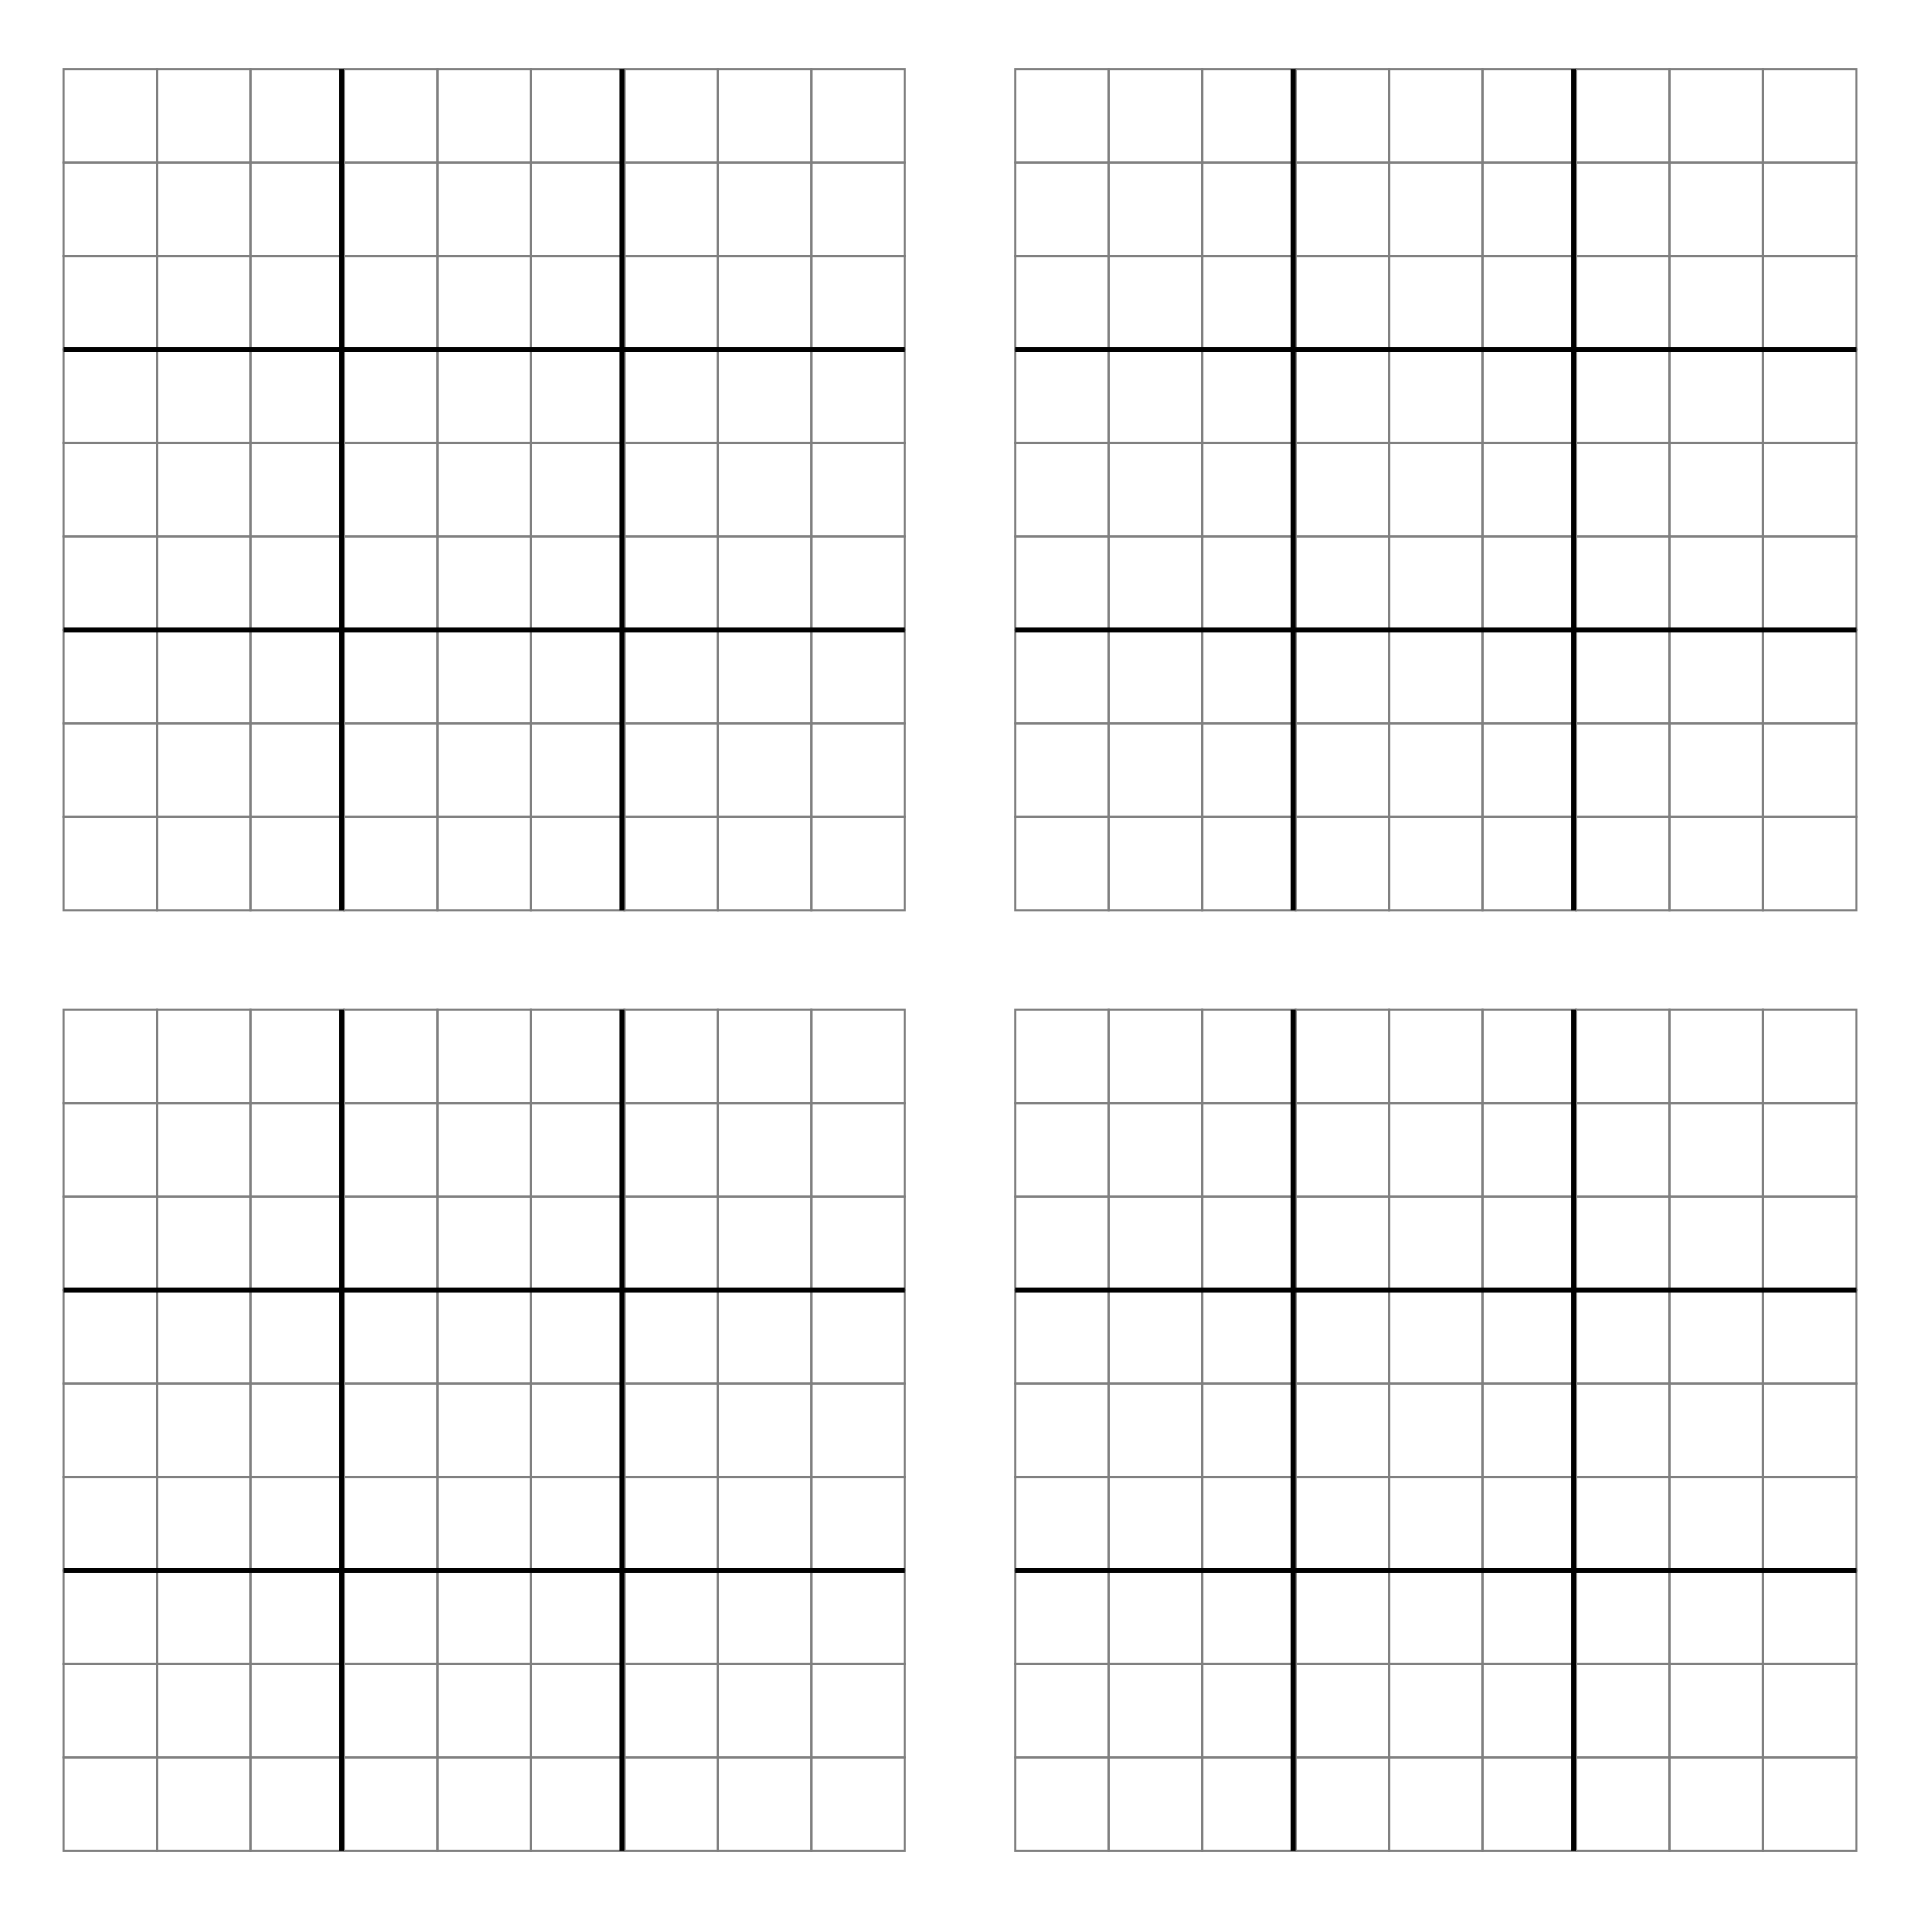 4 Best Images of Printable Blank Sudoku Grid 2 Per Page Printable